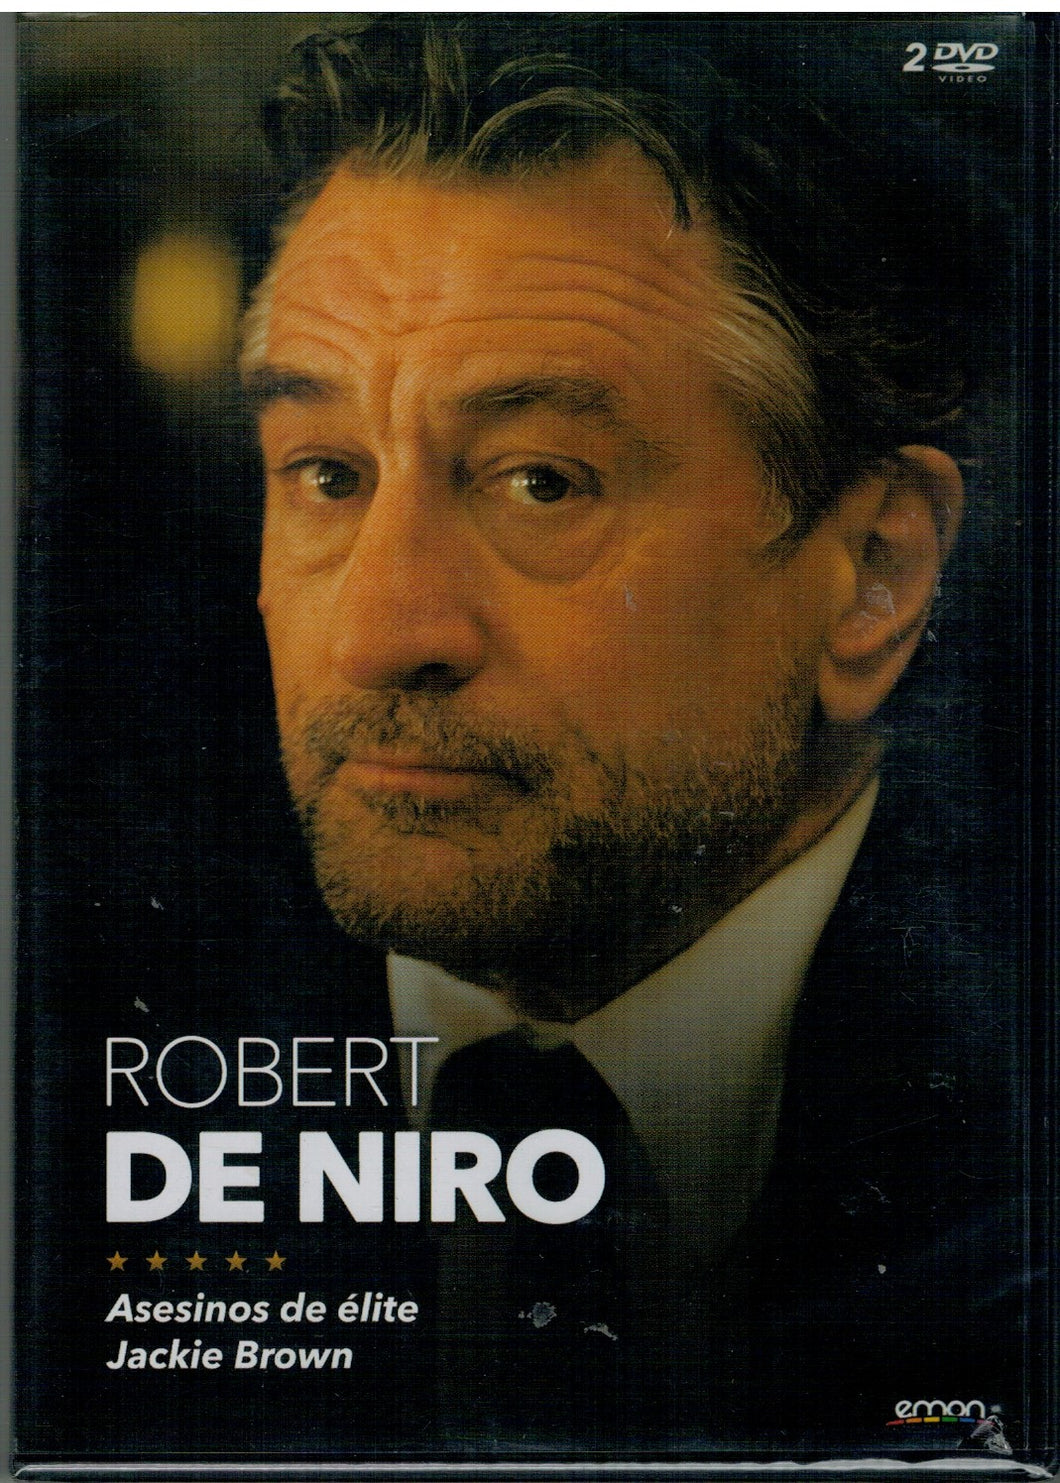 Pack Robert de Niro (Asesinos de Elite - Jackie Brown) (2 DVD Nuevo)